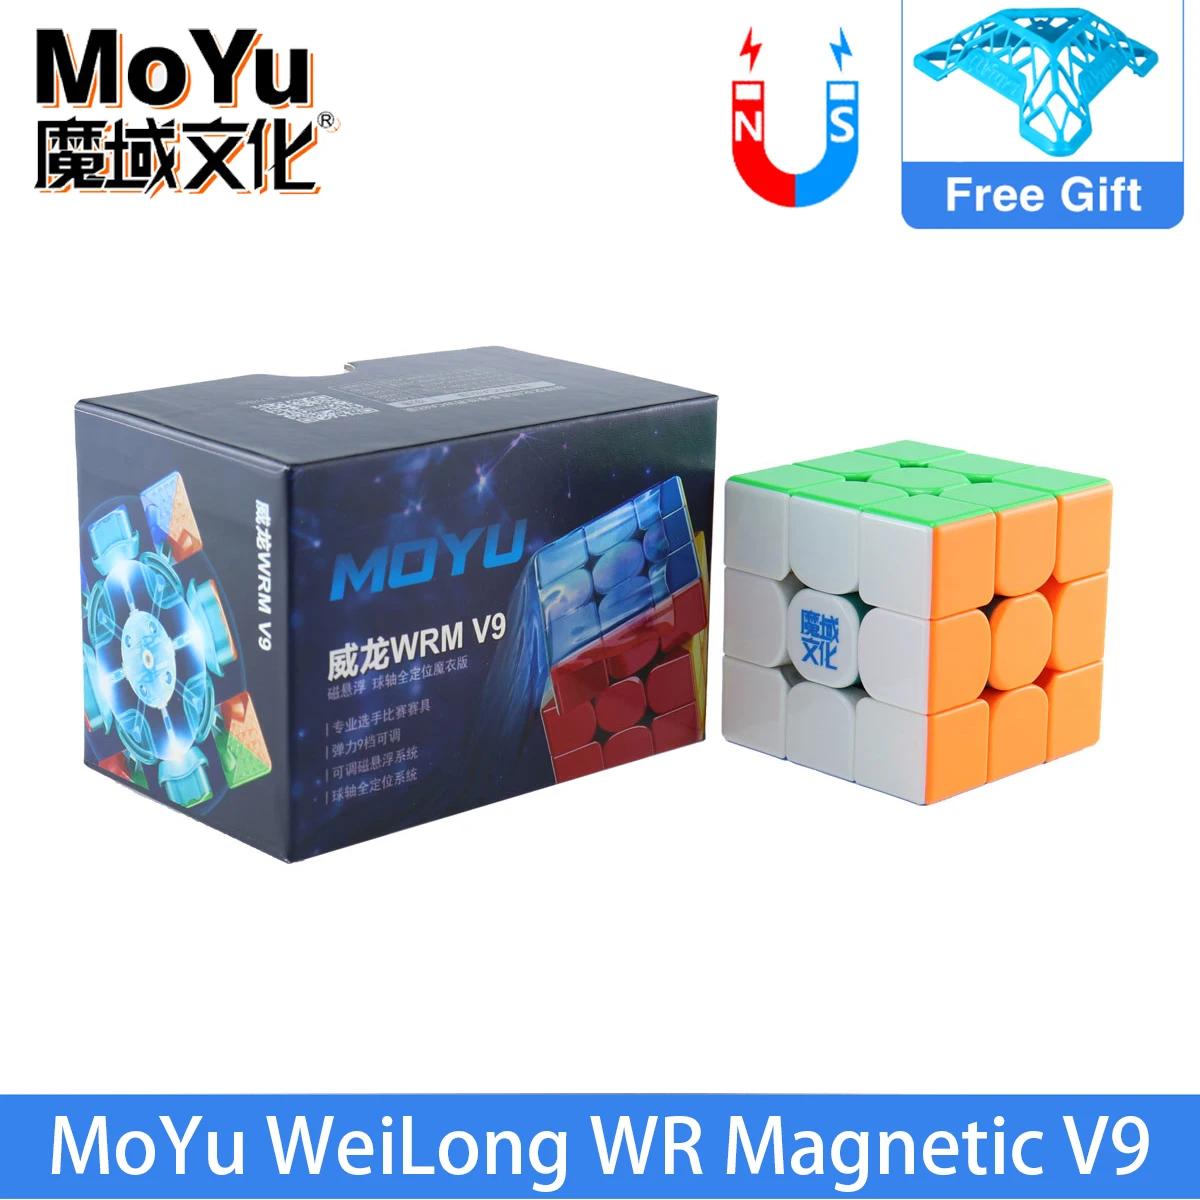 

MoYu WeiLong WRM V9 Maglev Ball Core UV 3x3 Magic Cube Professional MoYu WeiLong WR M V9 Magnetic 3x3x3 Cubo Magico Puzzle Toys